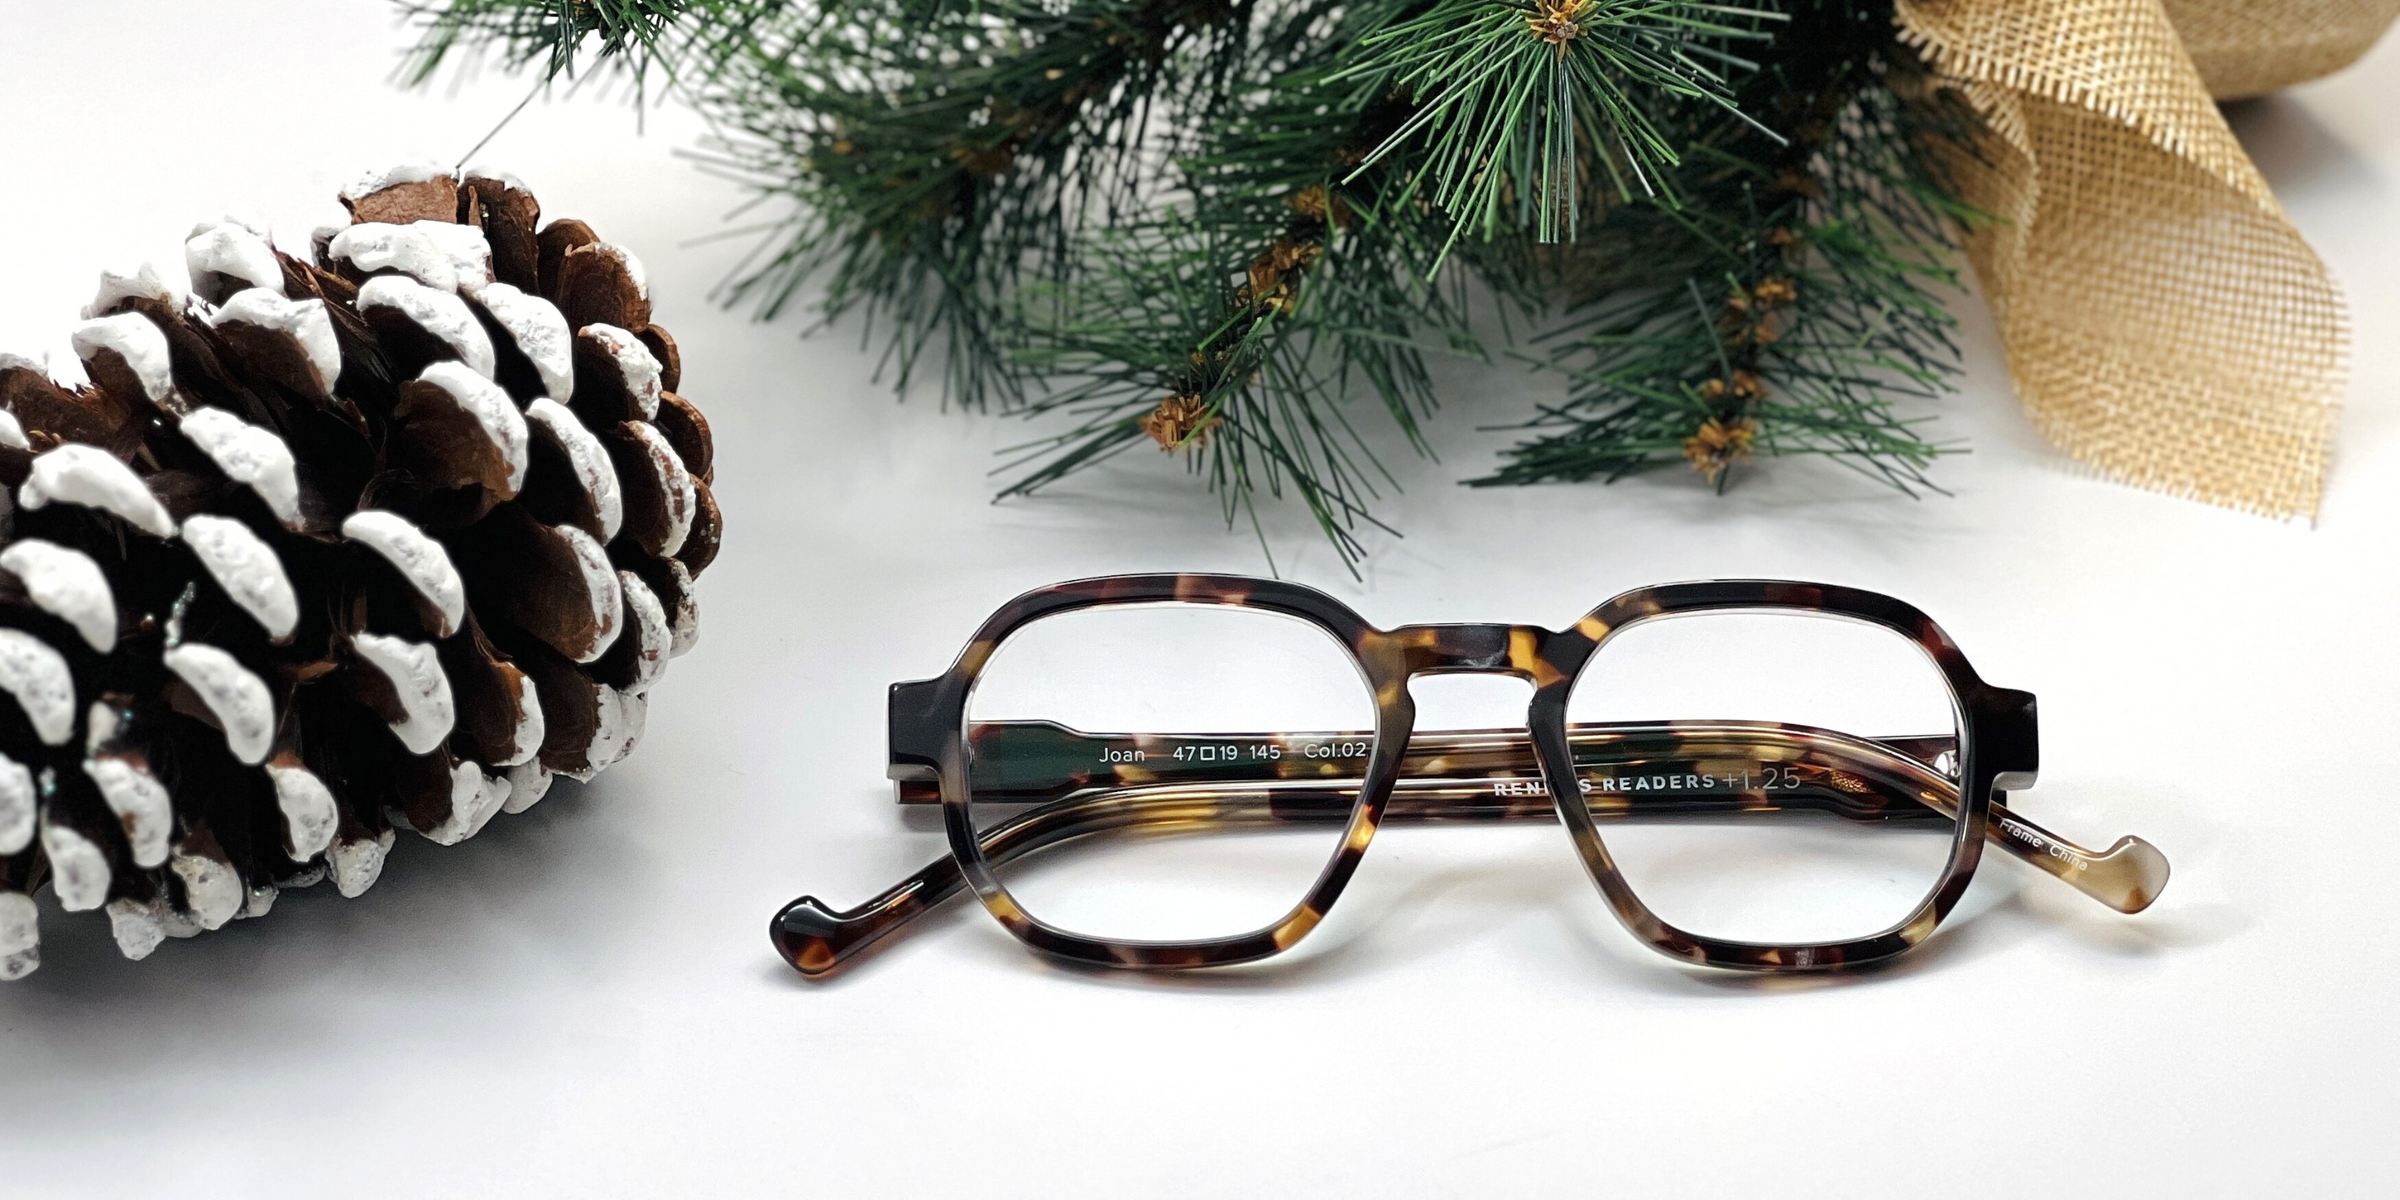 Best Quality Reading Glasses |  RENEE'S READERS